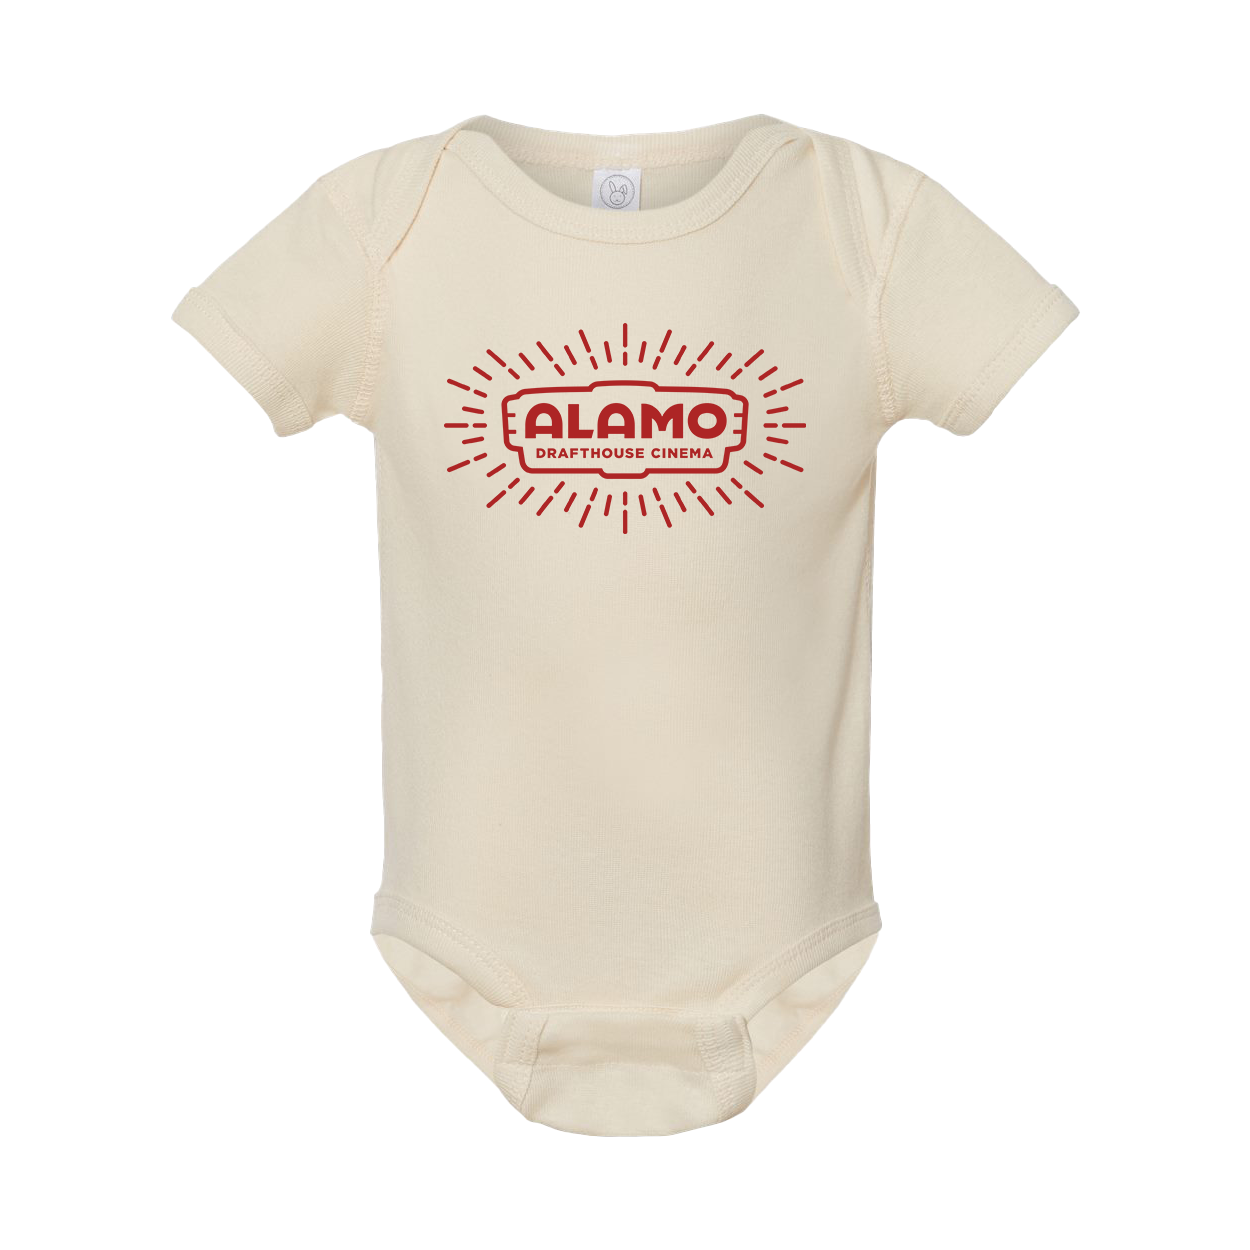 Alamo Starburst Baby Onesie